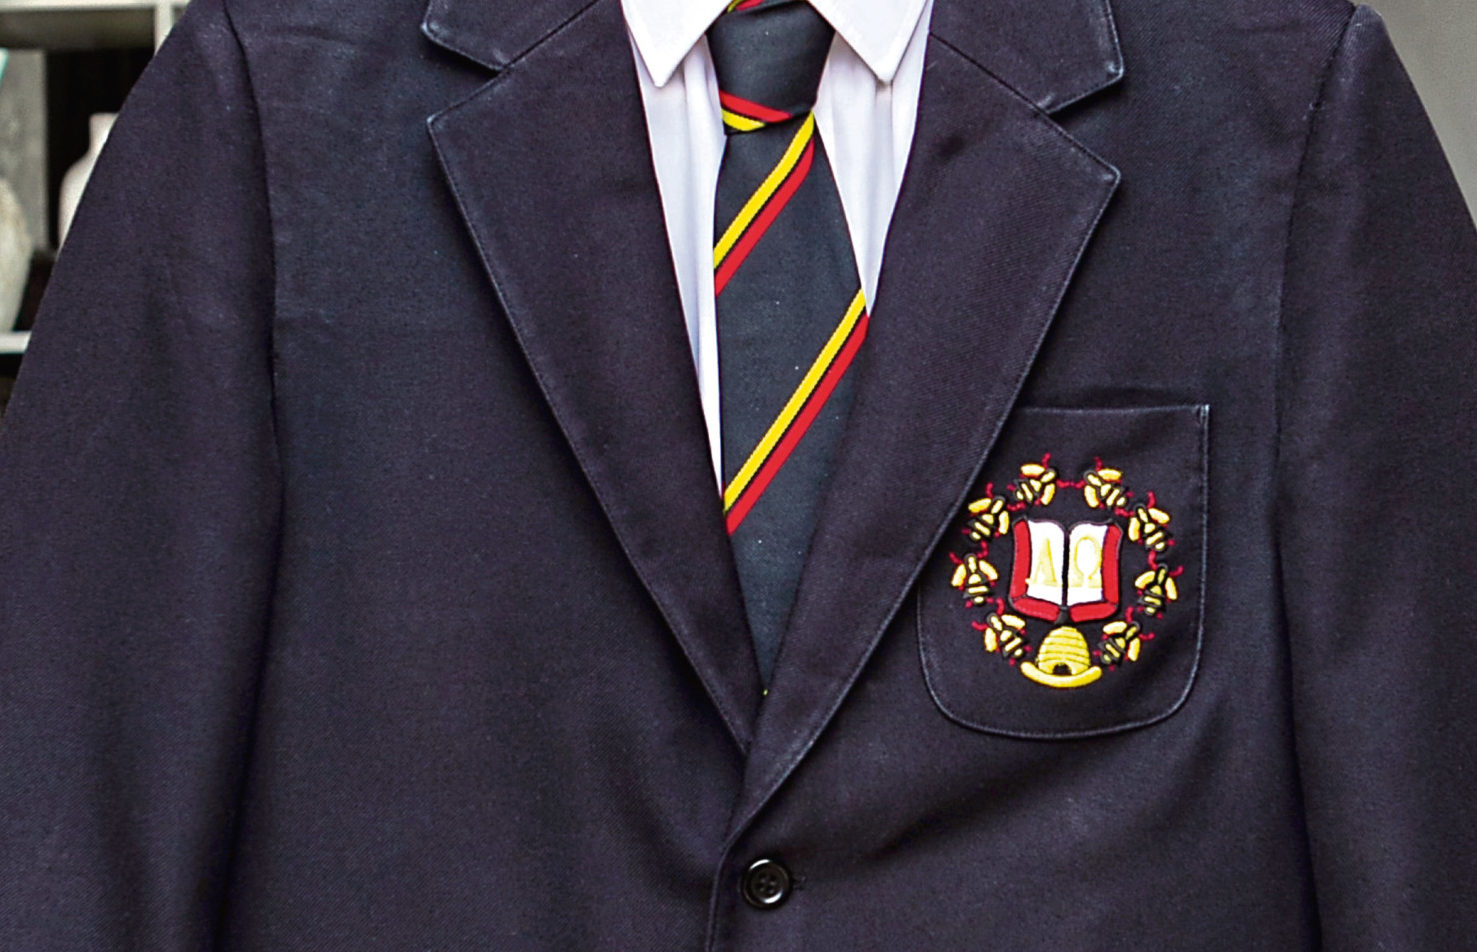 St Ambrose High School uniform